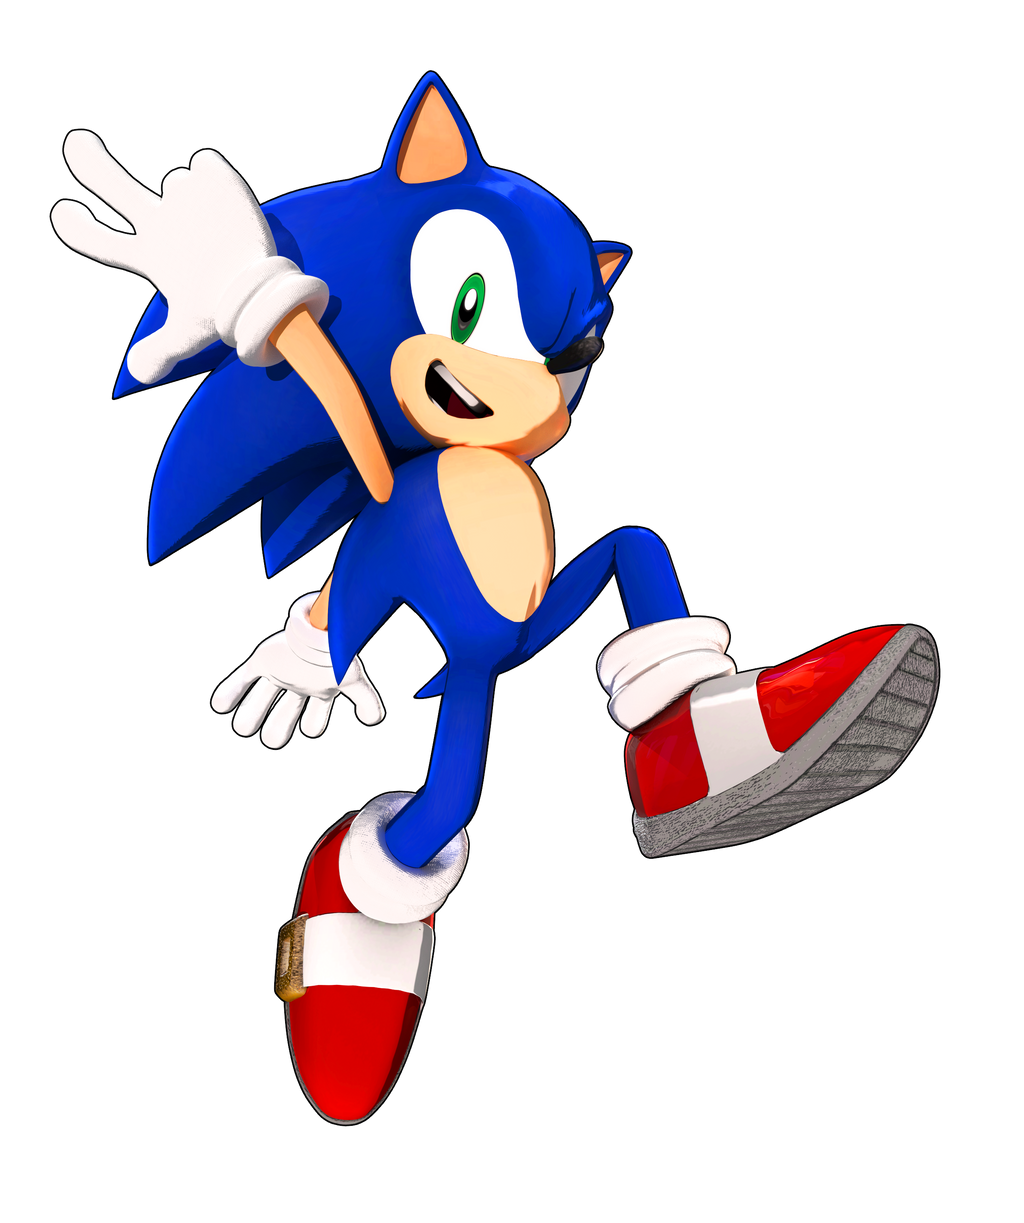 Sonic the Hedgehog (2006) by itsHelias94 on DeviantArt